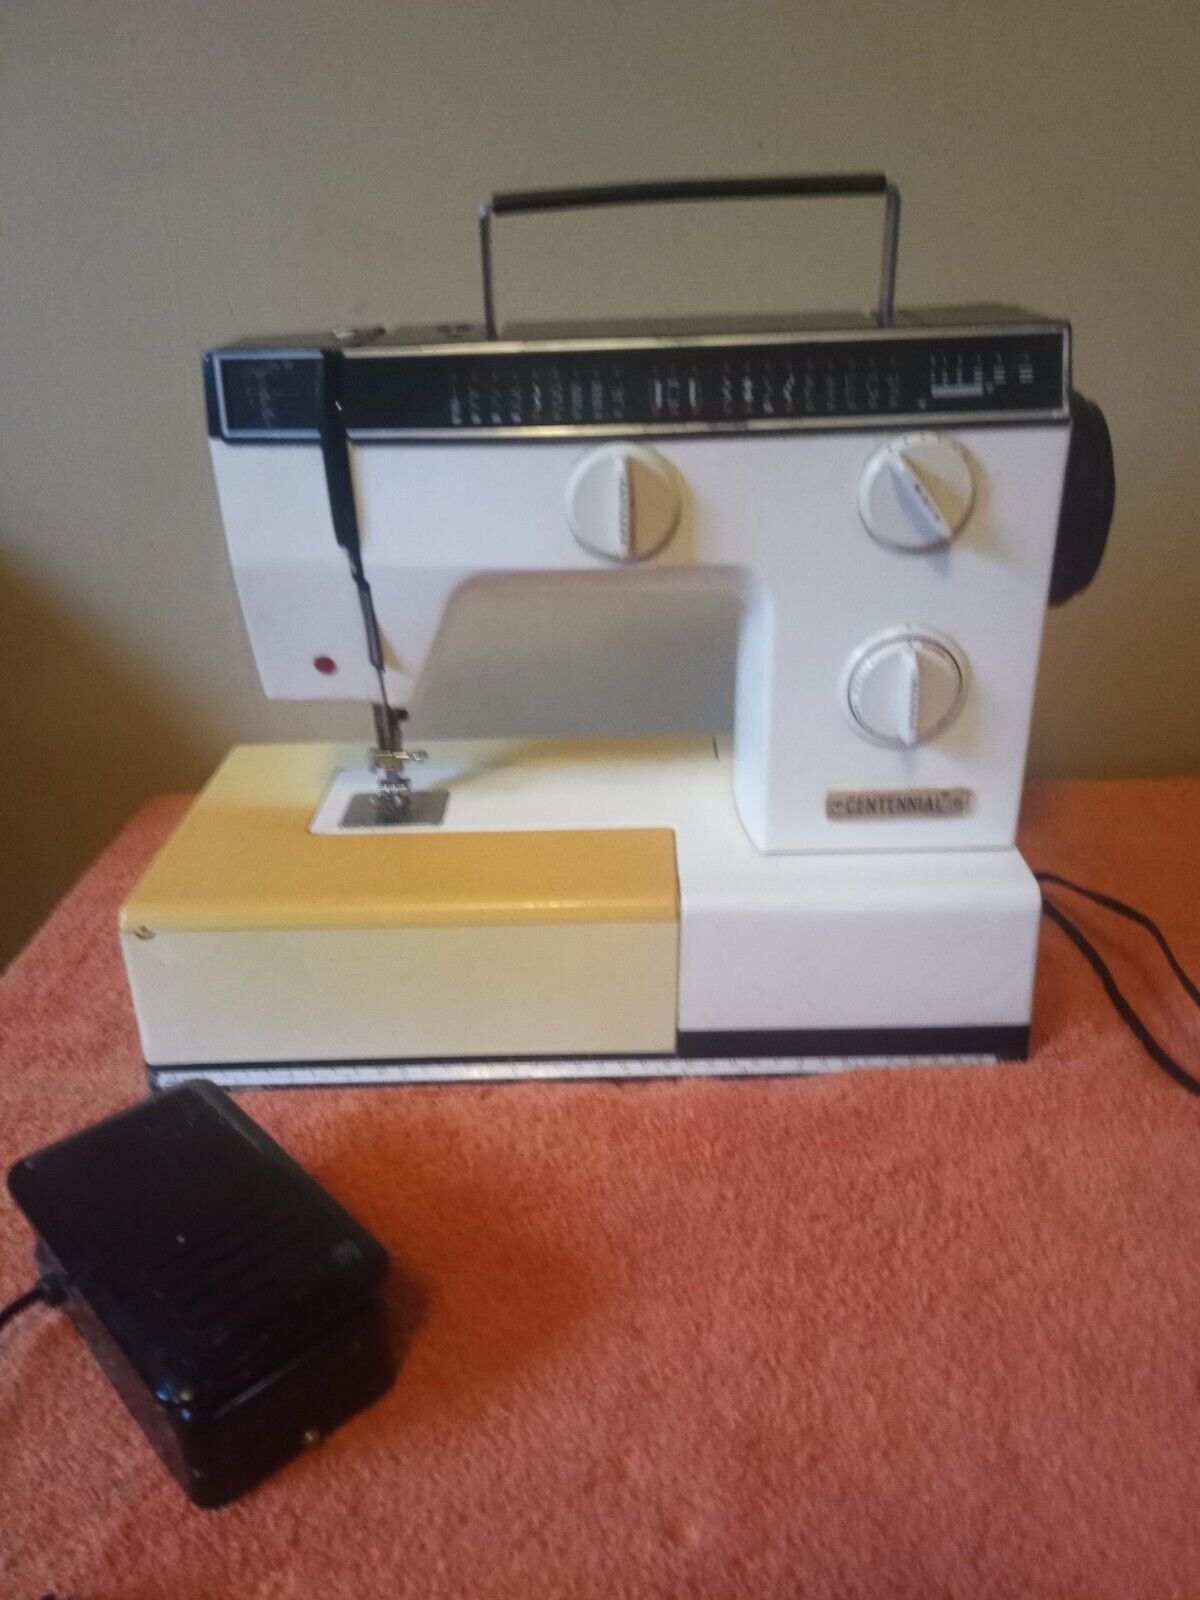  Vintage Centennial Dial & Sew Zig-Zag Sewing Machine w. Accessories & Case